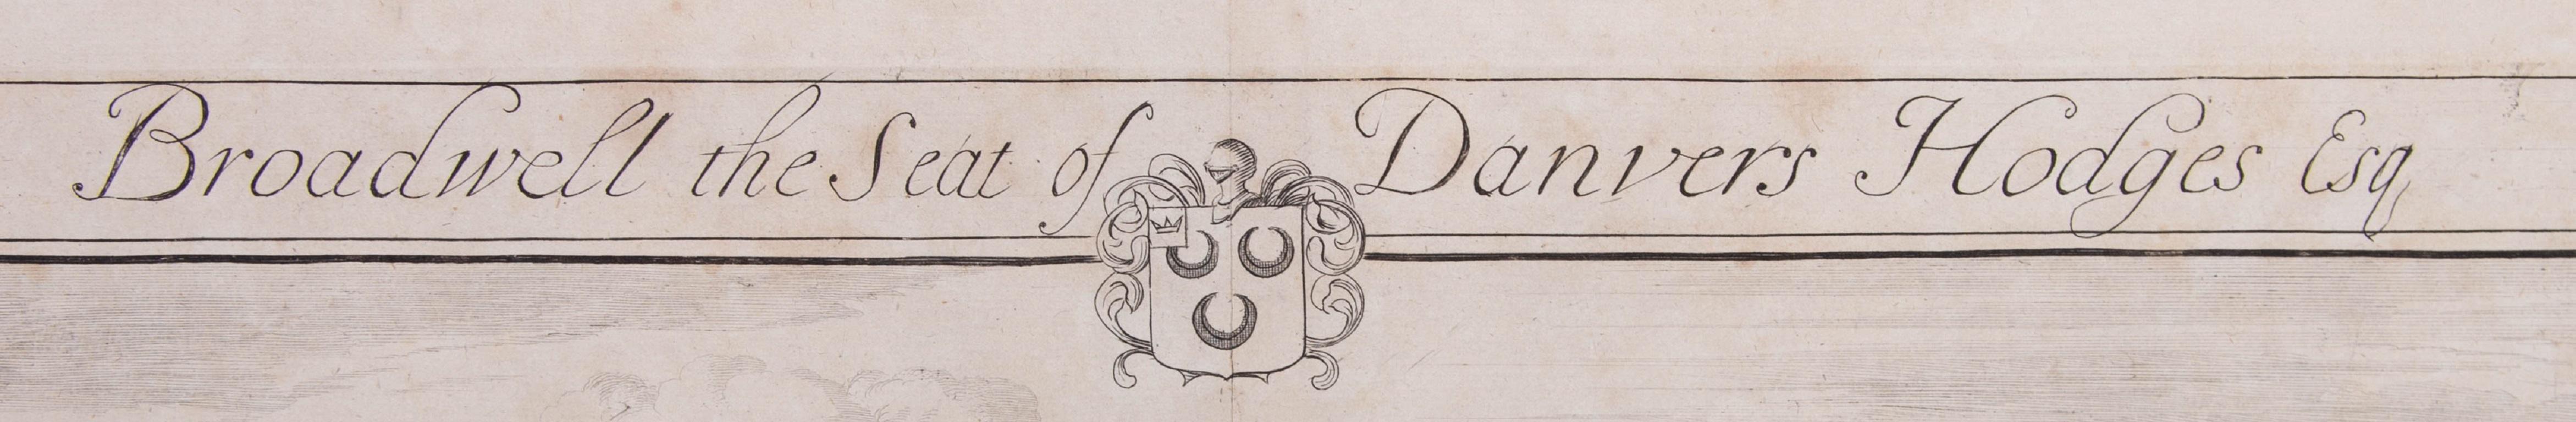 Johannes 'Jan' Kip (c.1652-1722) - 1712 Engraving, Broadwell 2